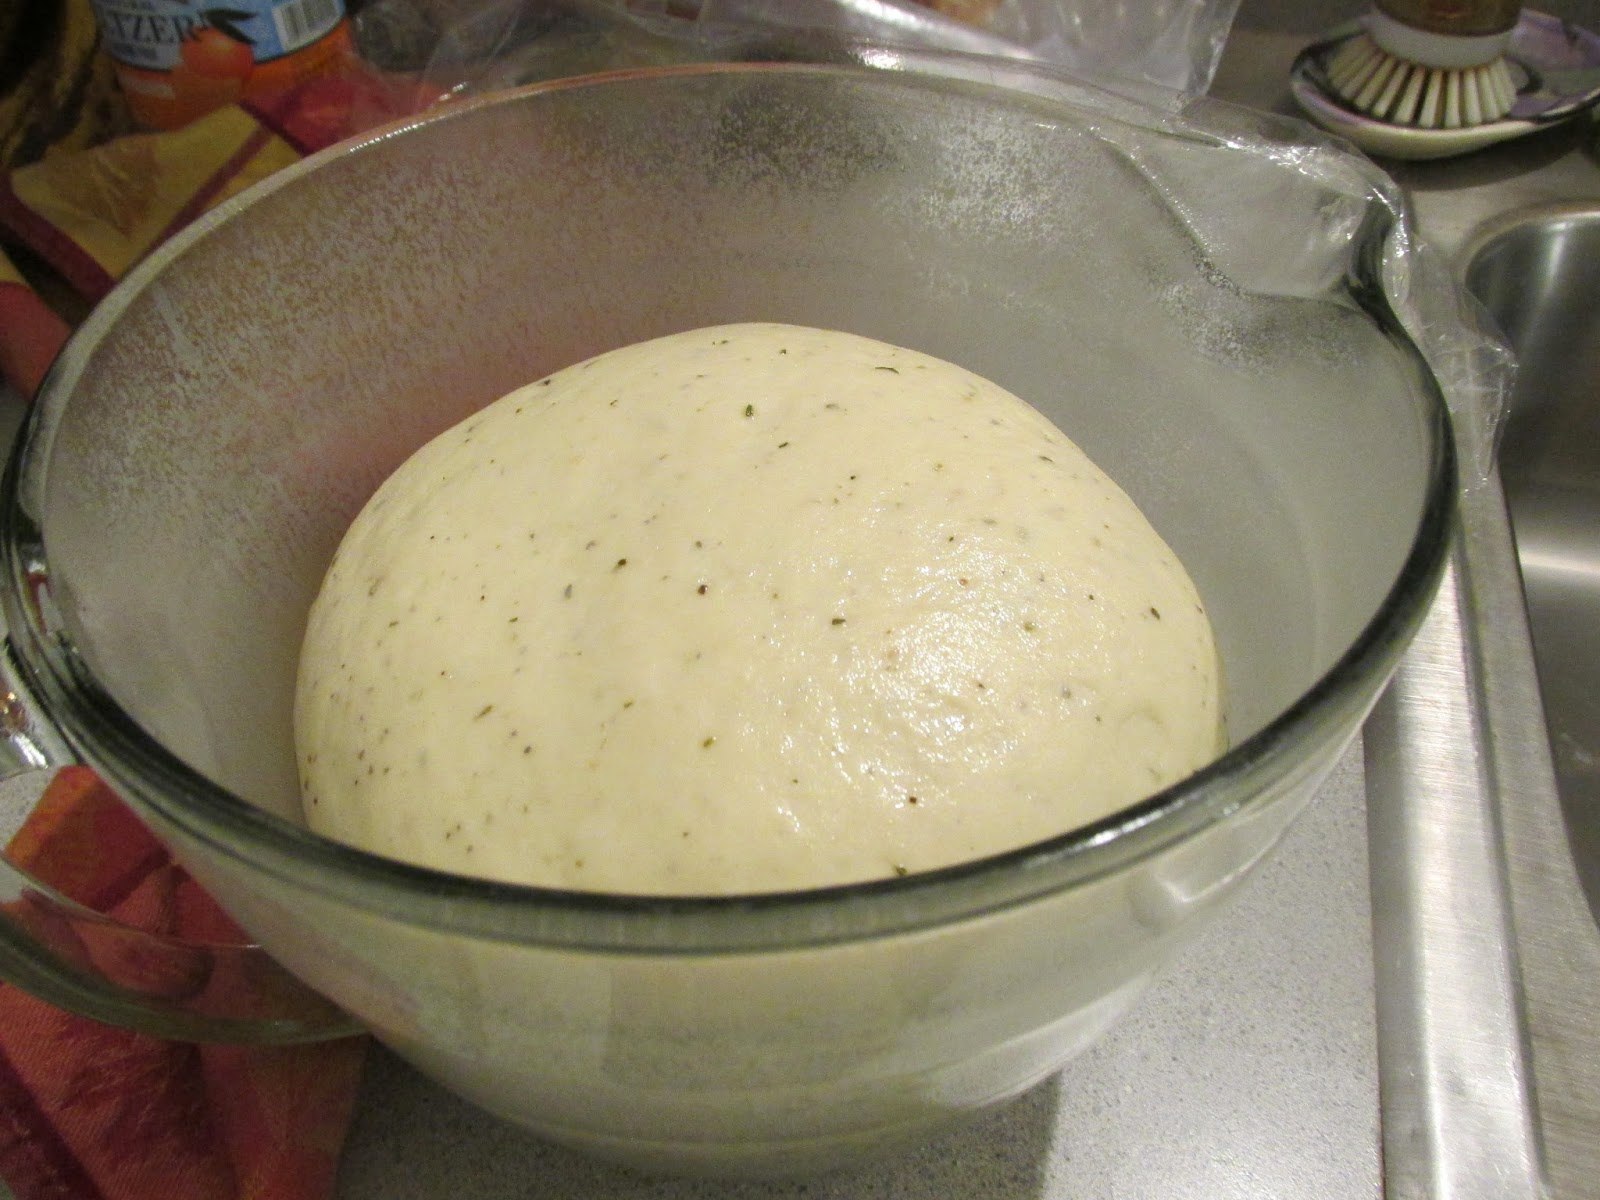 Хлеб на сковороде быстро на дрожжах и воде рецепт с фото пошагово в домашних условиях